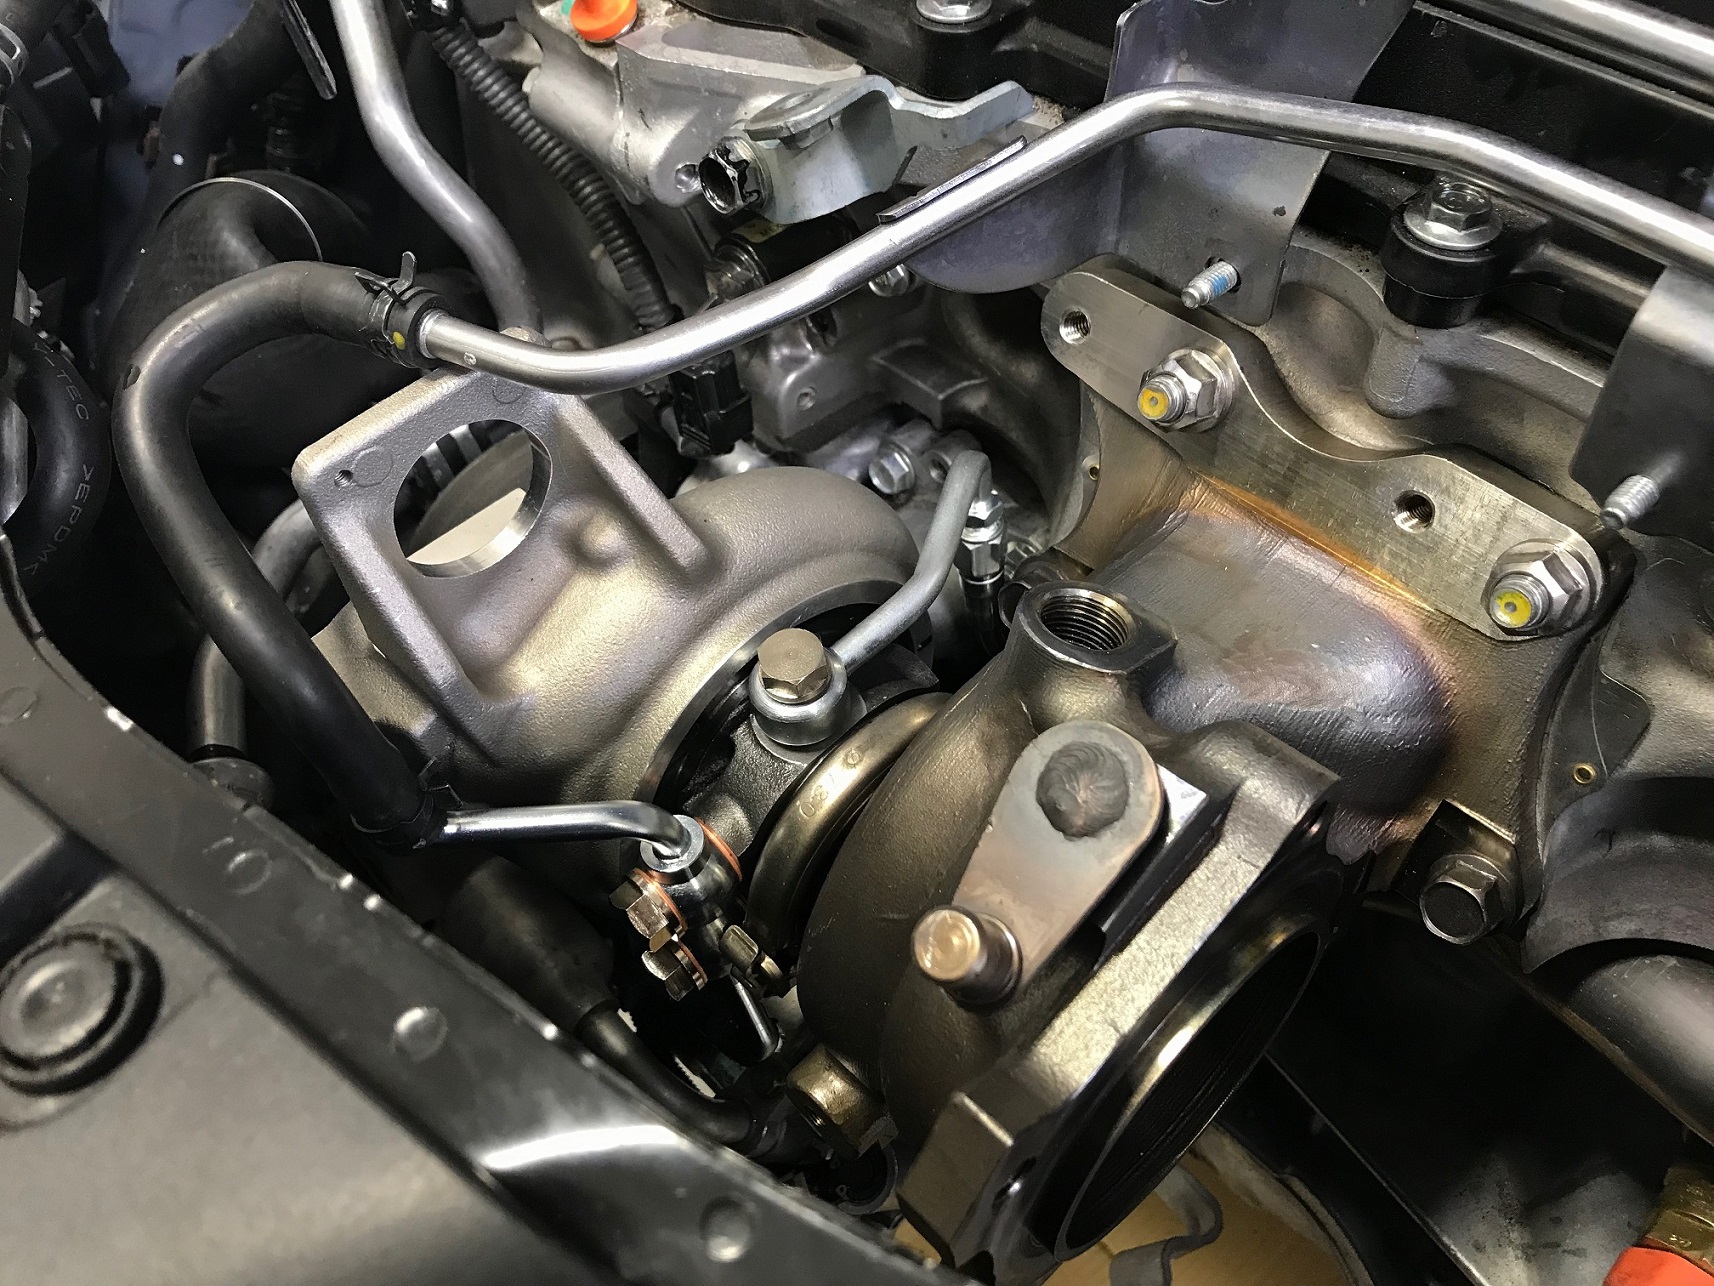 w1-turbo-kit-installed-in-2018-honda-civc-si-engine-bay